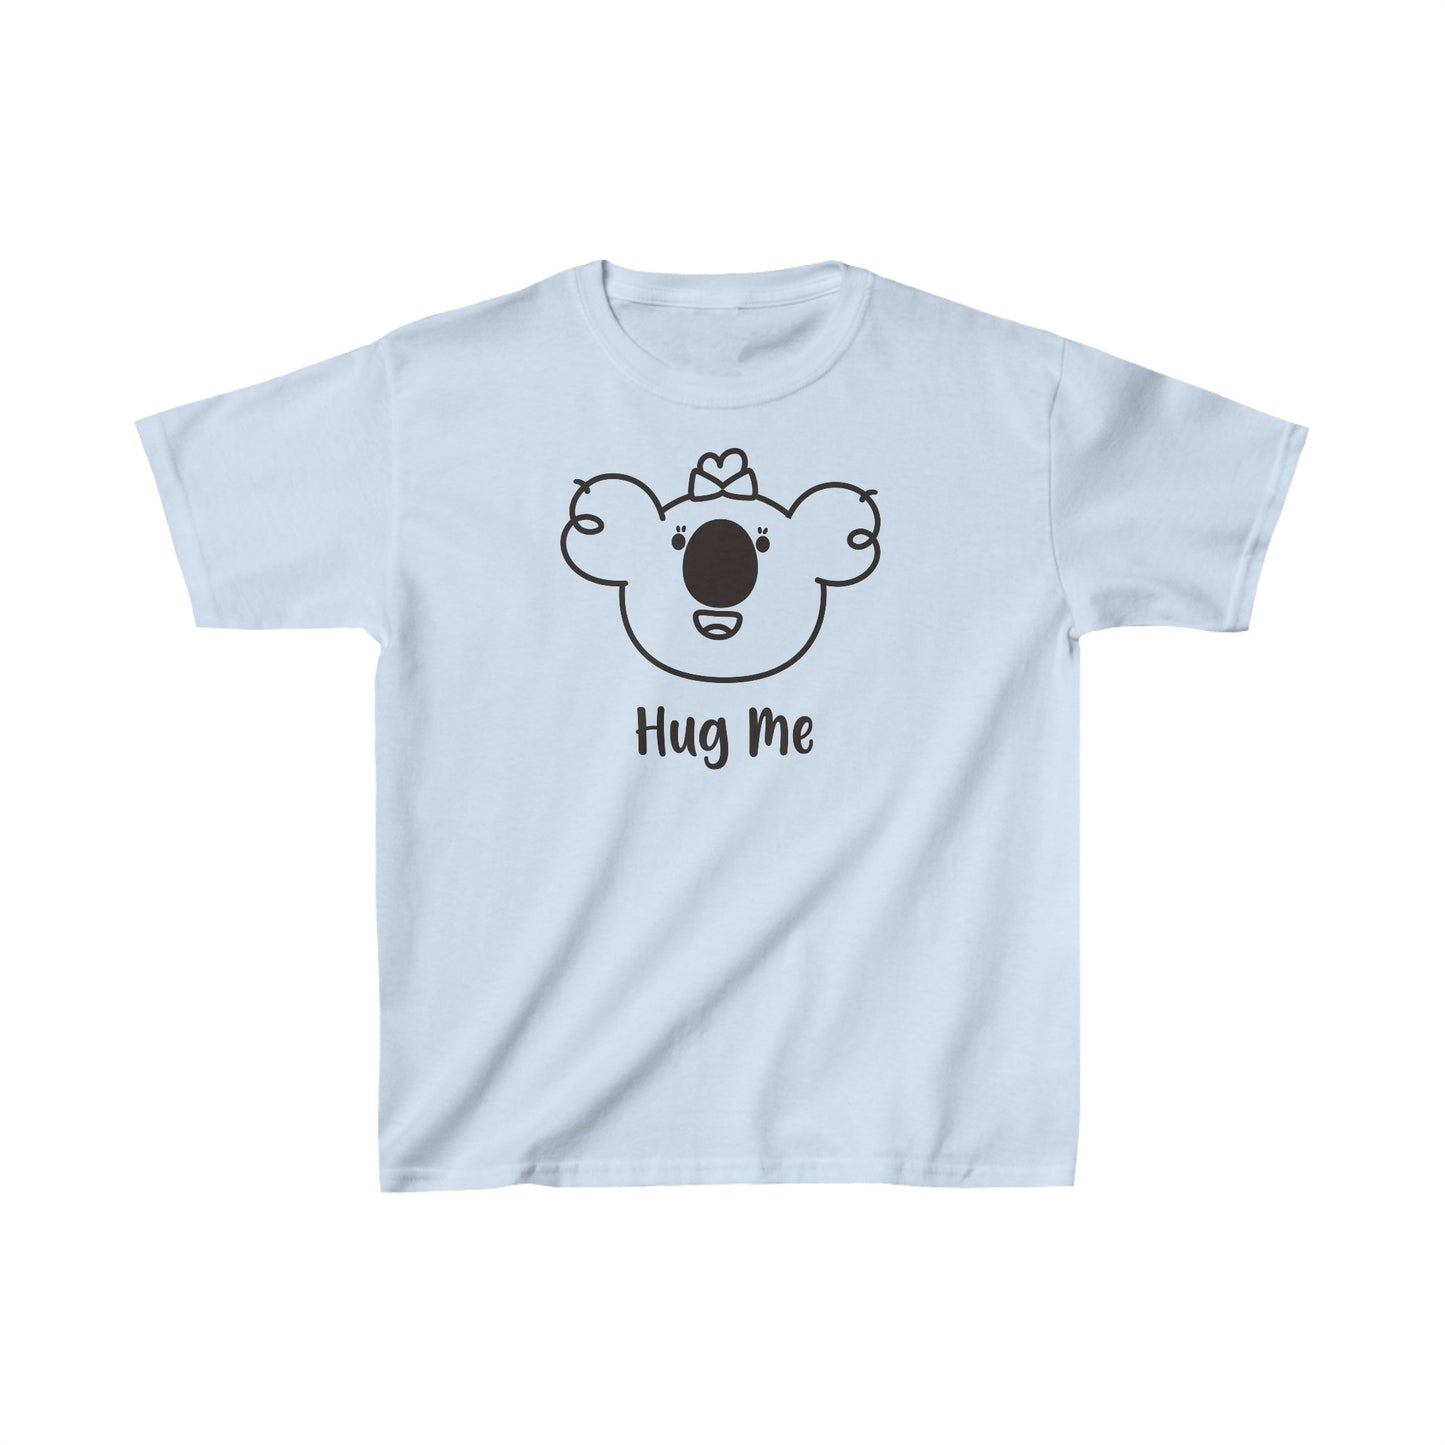 Poppy's Hug Me Kid's T-shirt - Bright Colors